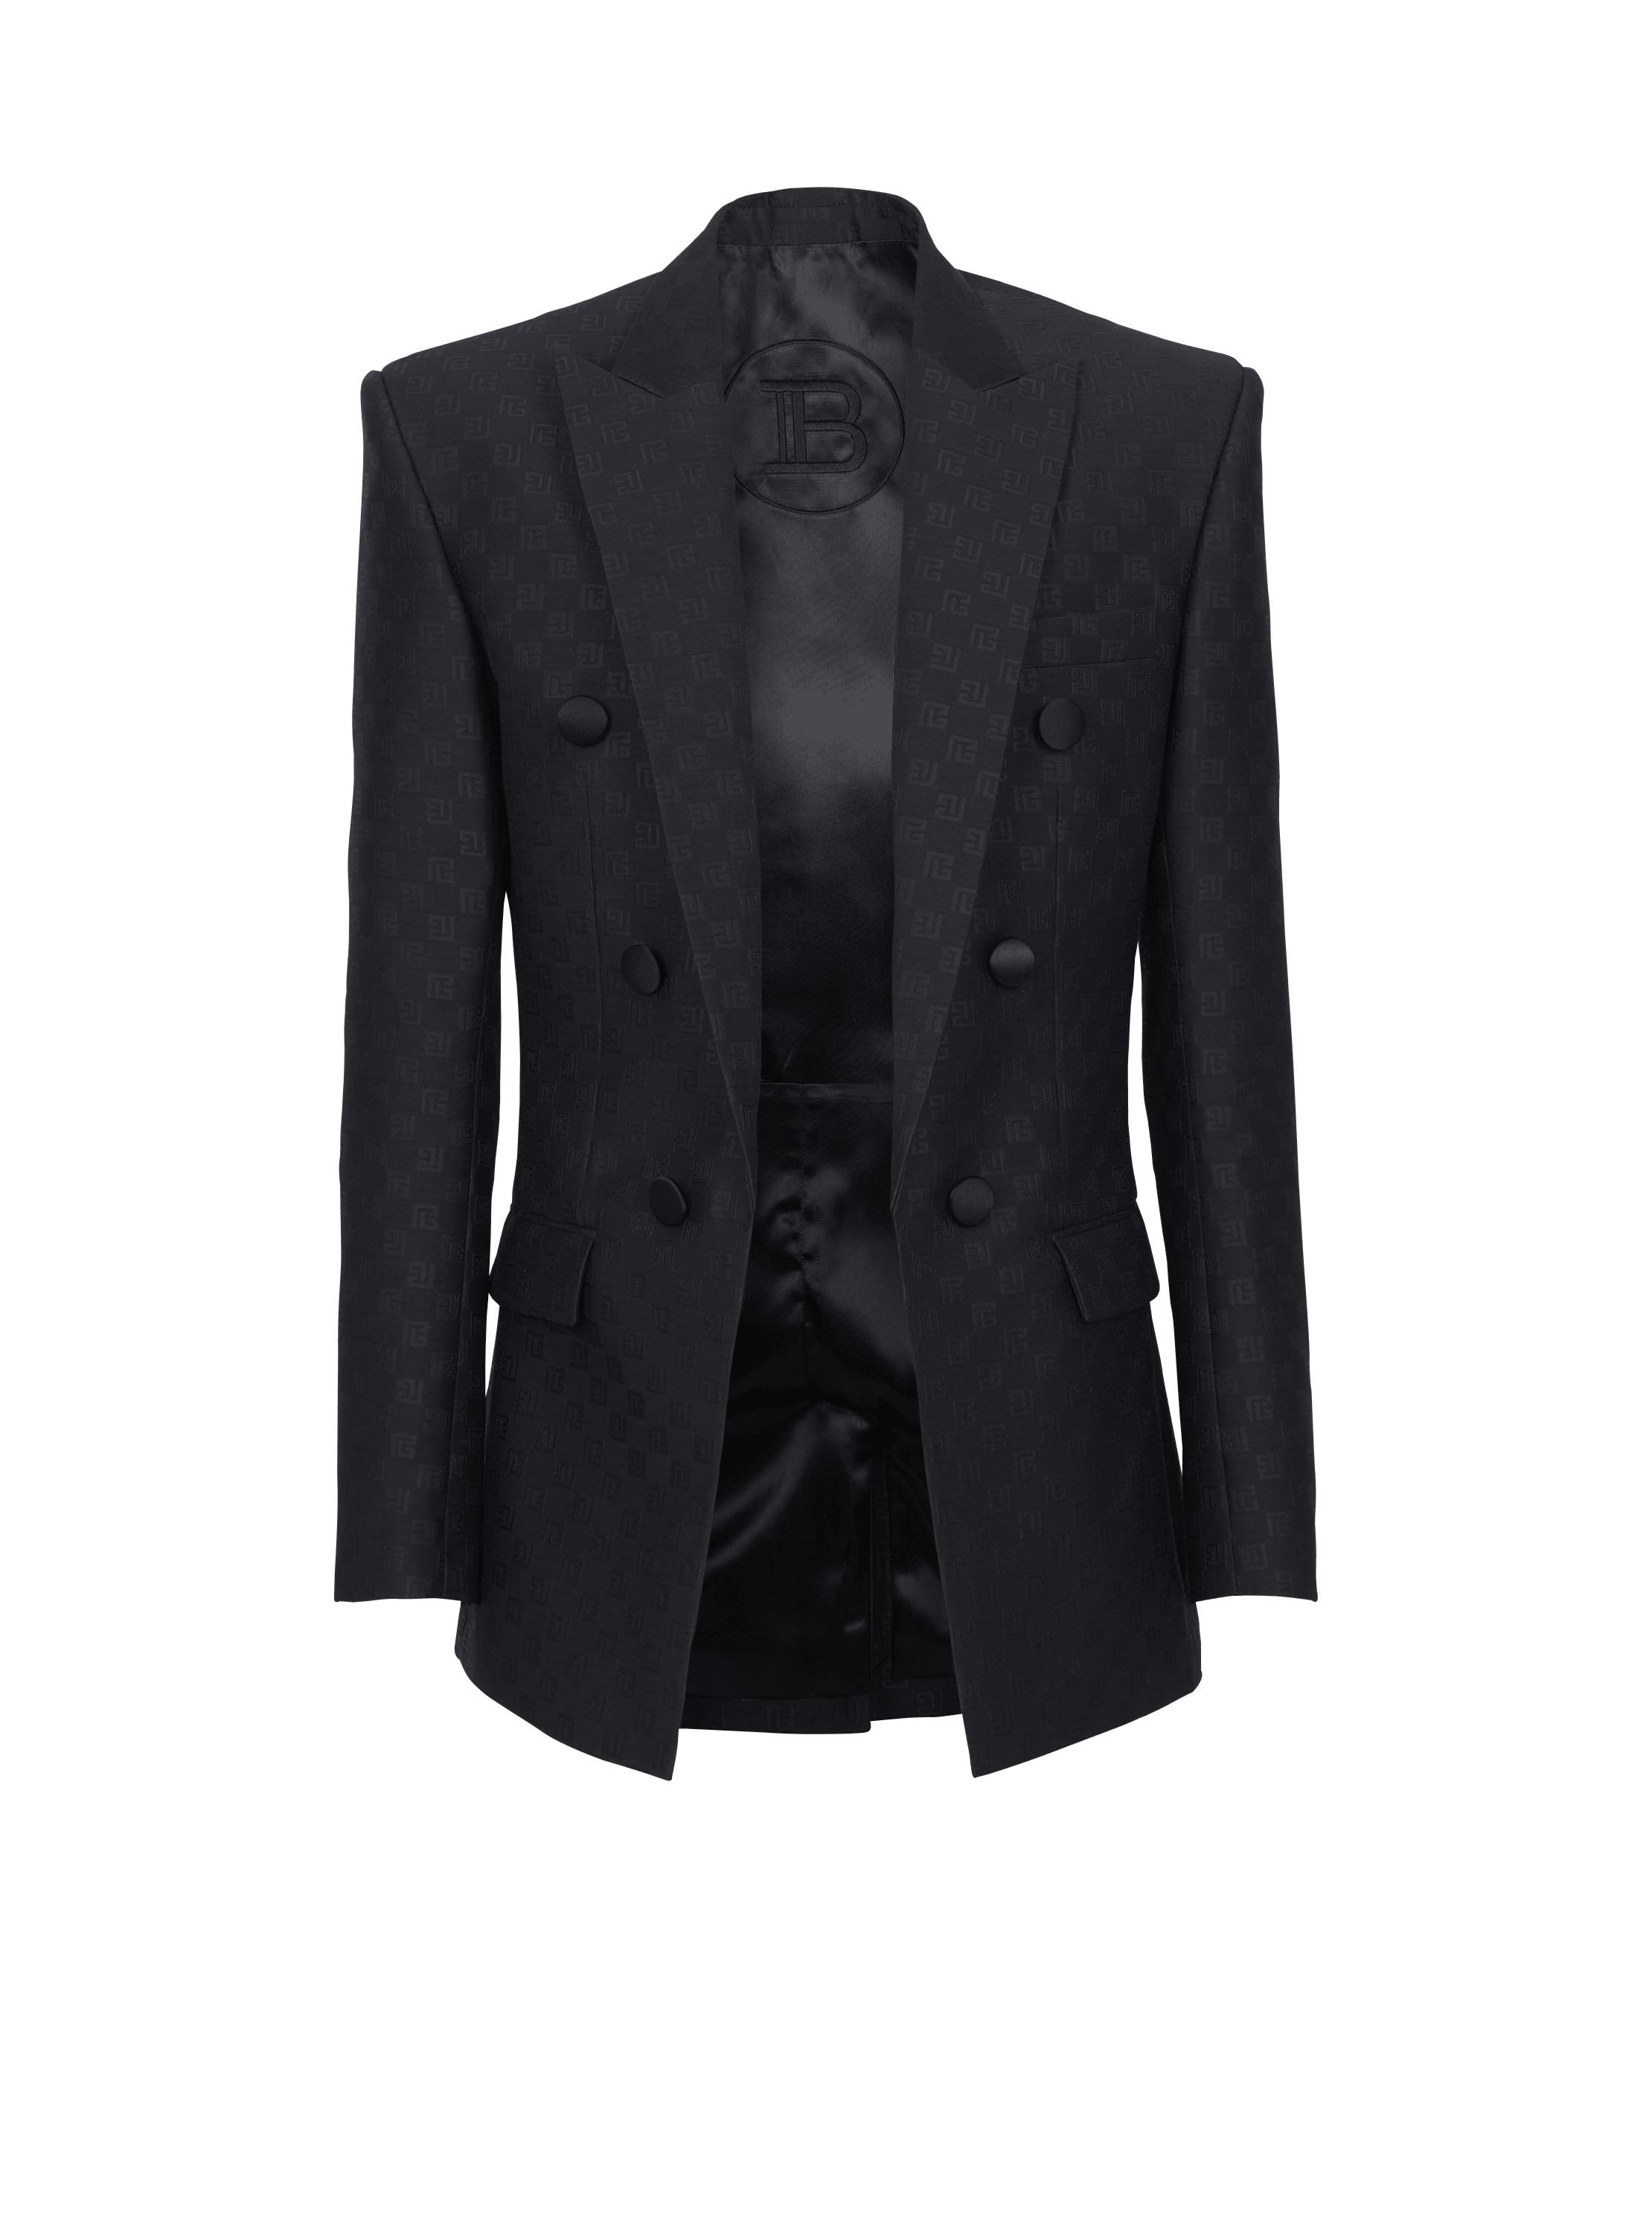 Mini monogram satin jacket, black, hi-res